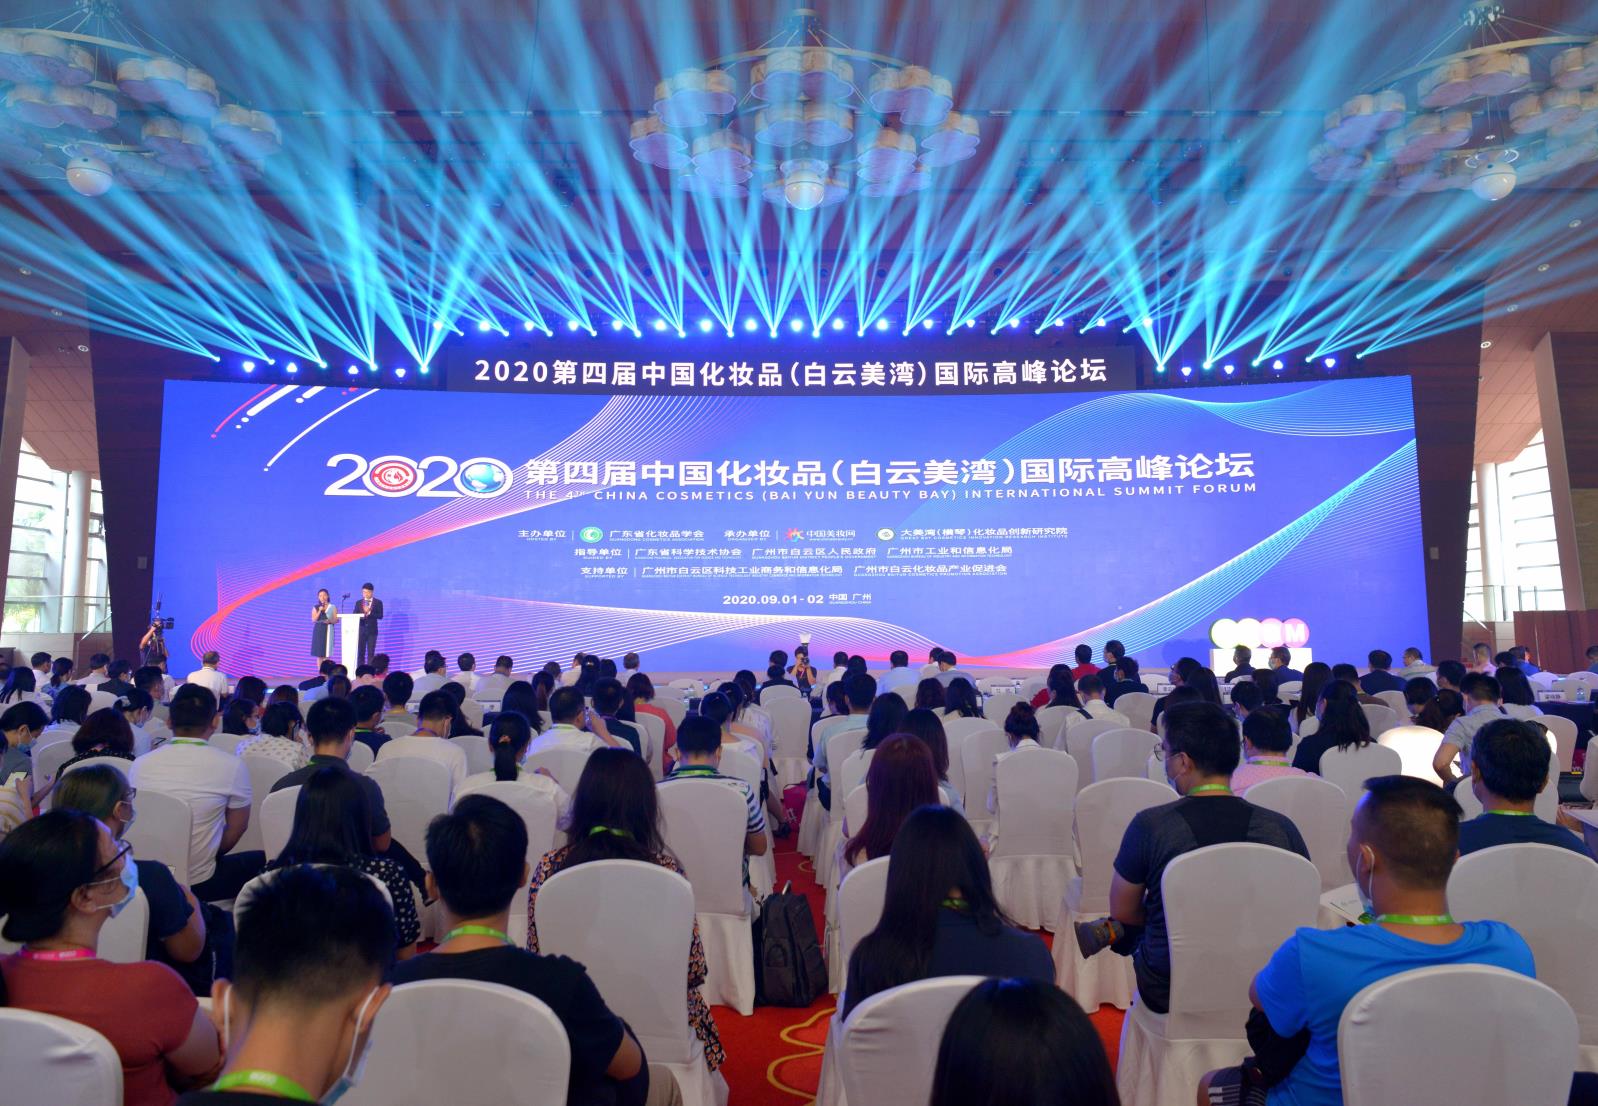 Aiki Bio丨2020 The 4th China Cosmetics (Baiyunmeiwan) International Summit Forum!